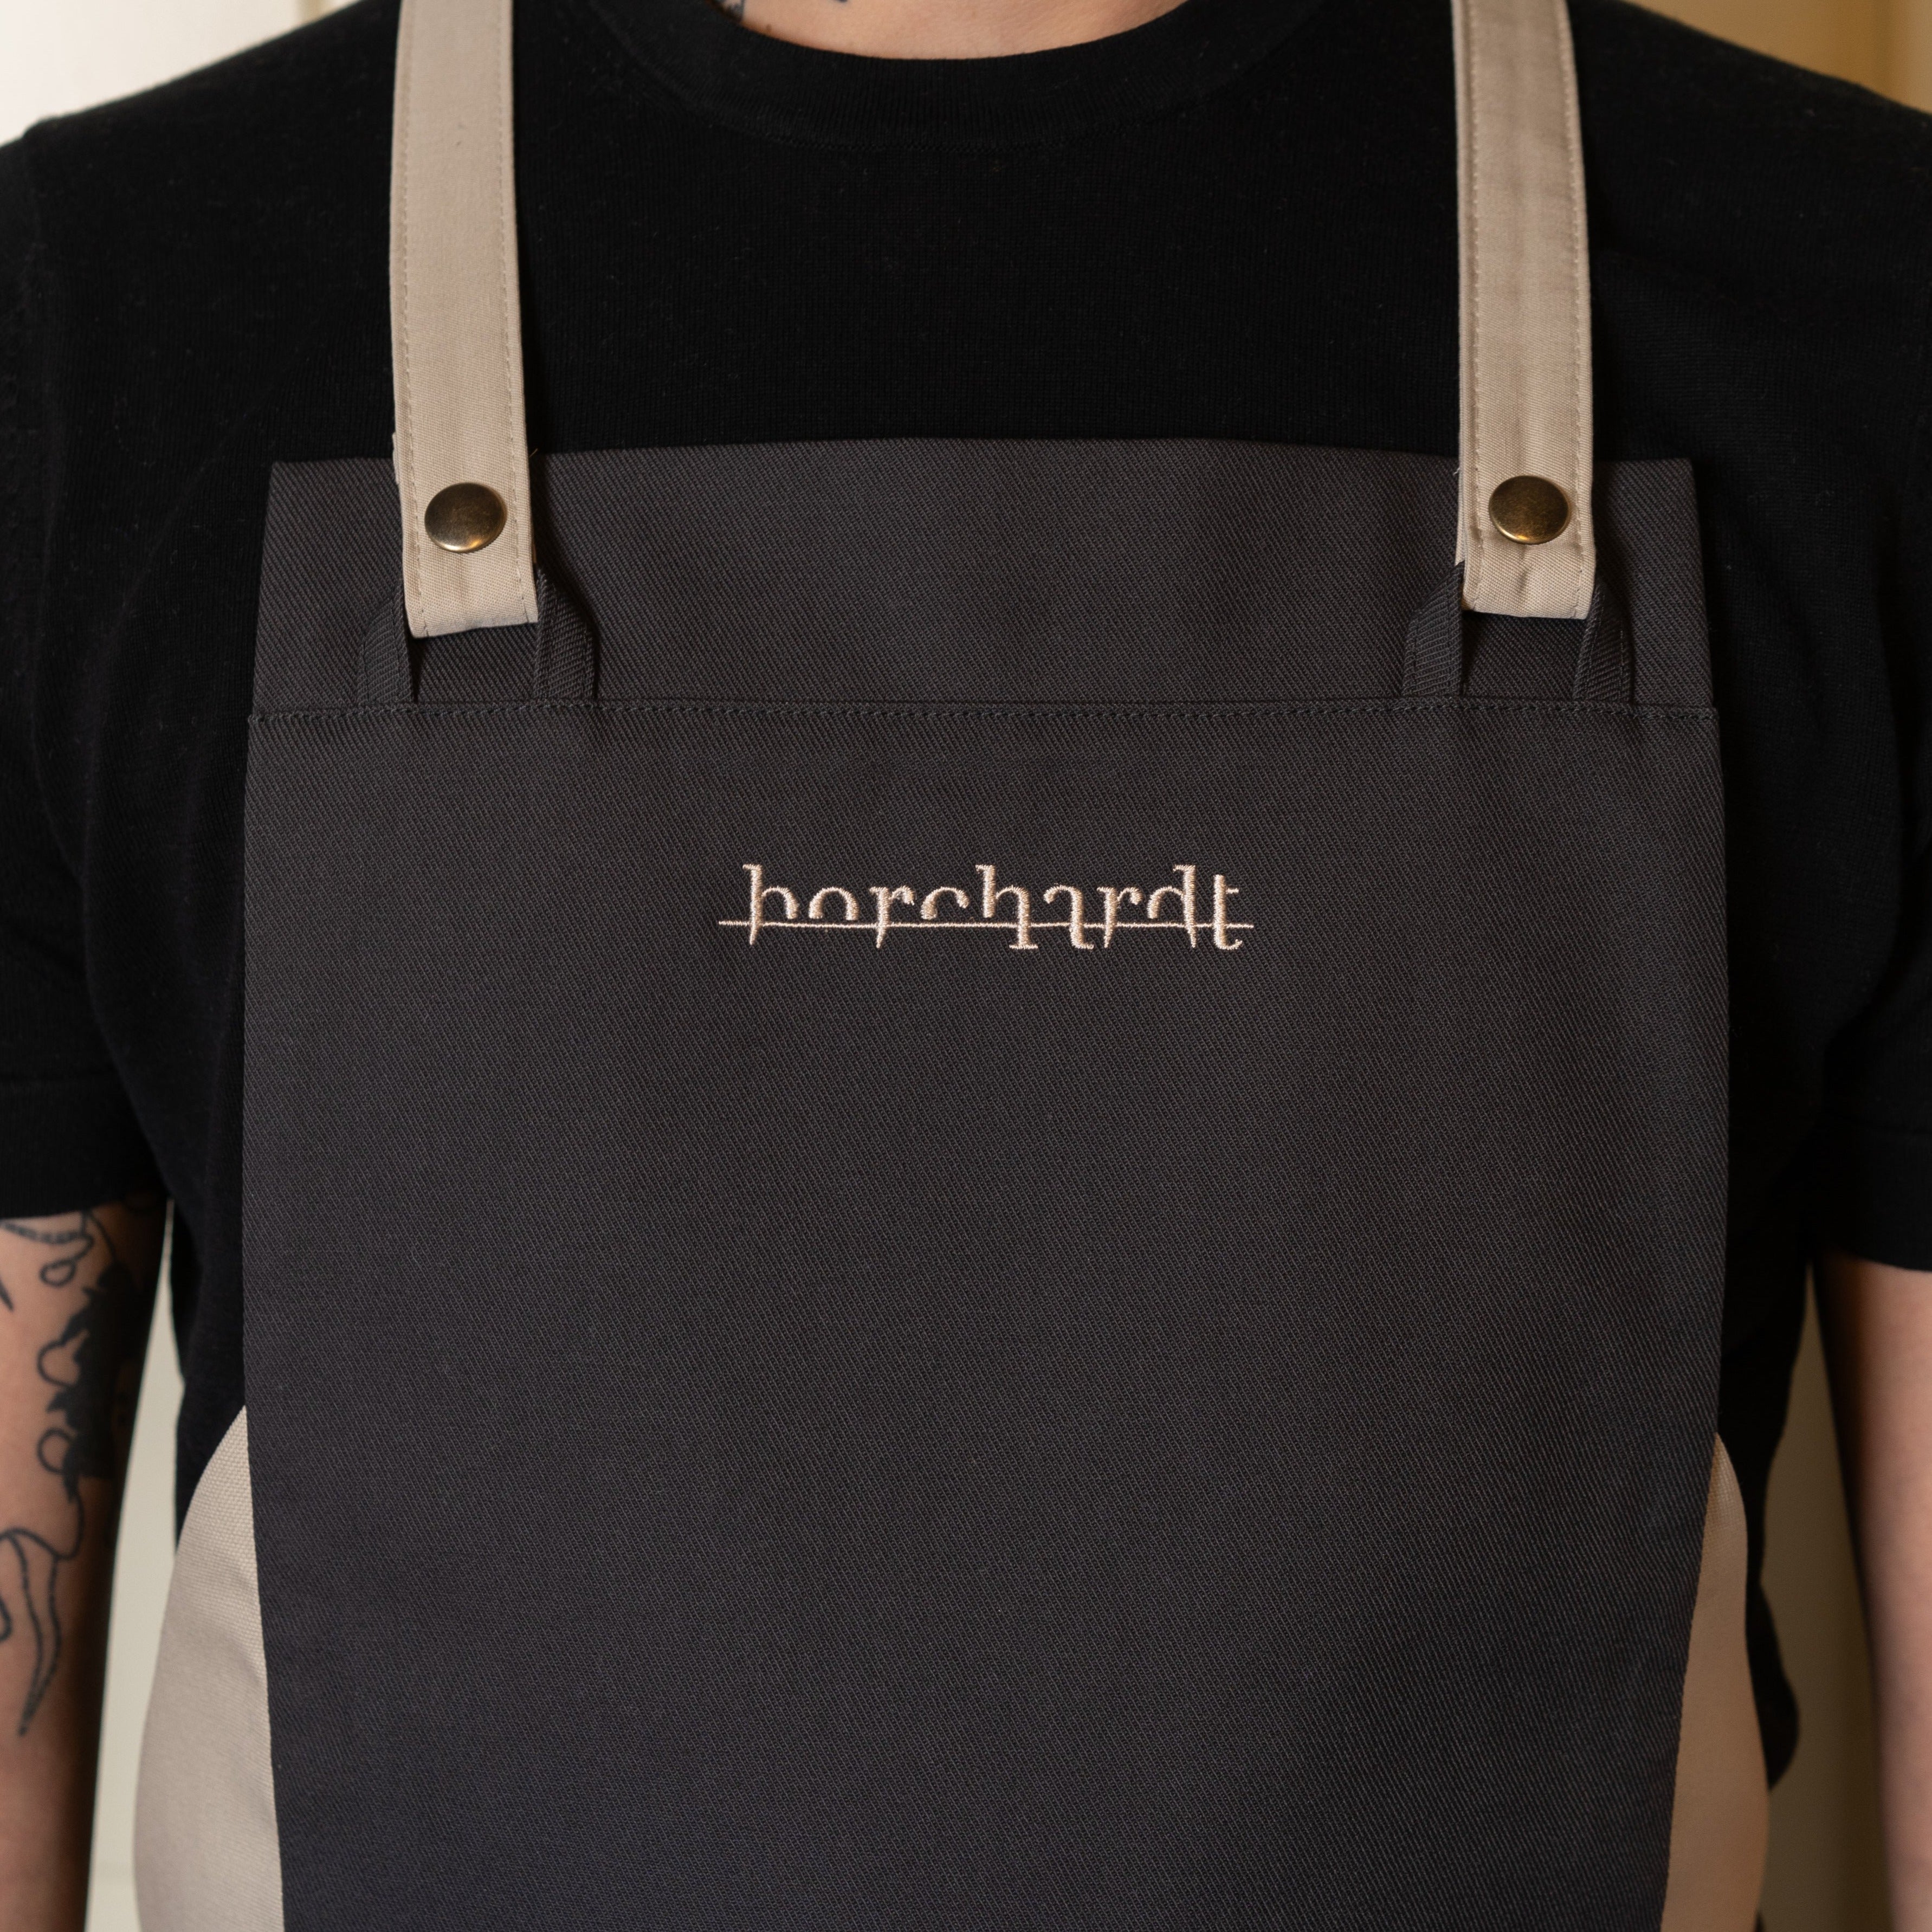 Apron in the exclusive borchardt design - hand-sewn in Berlin